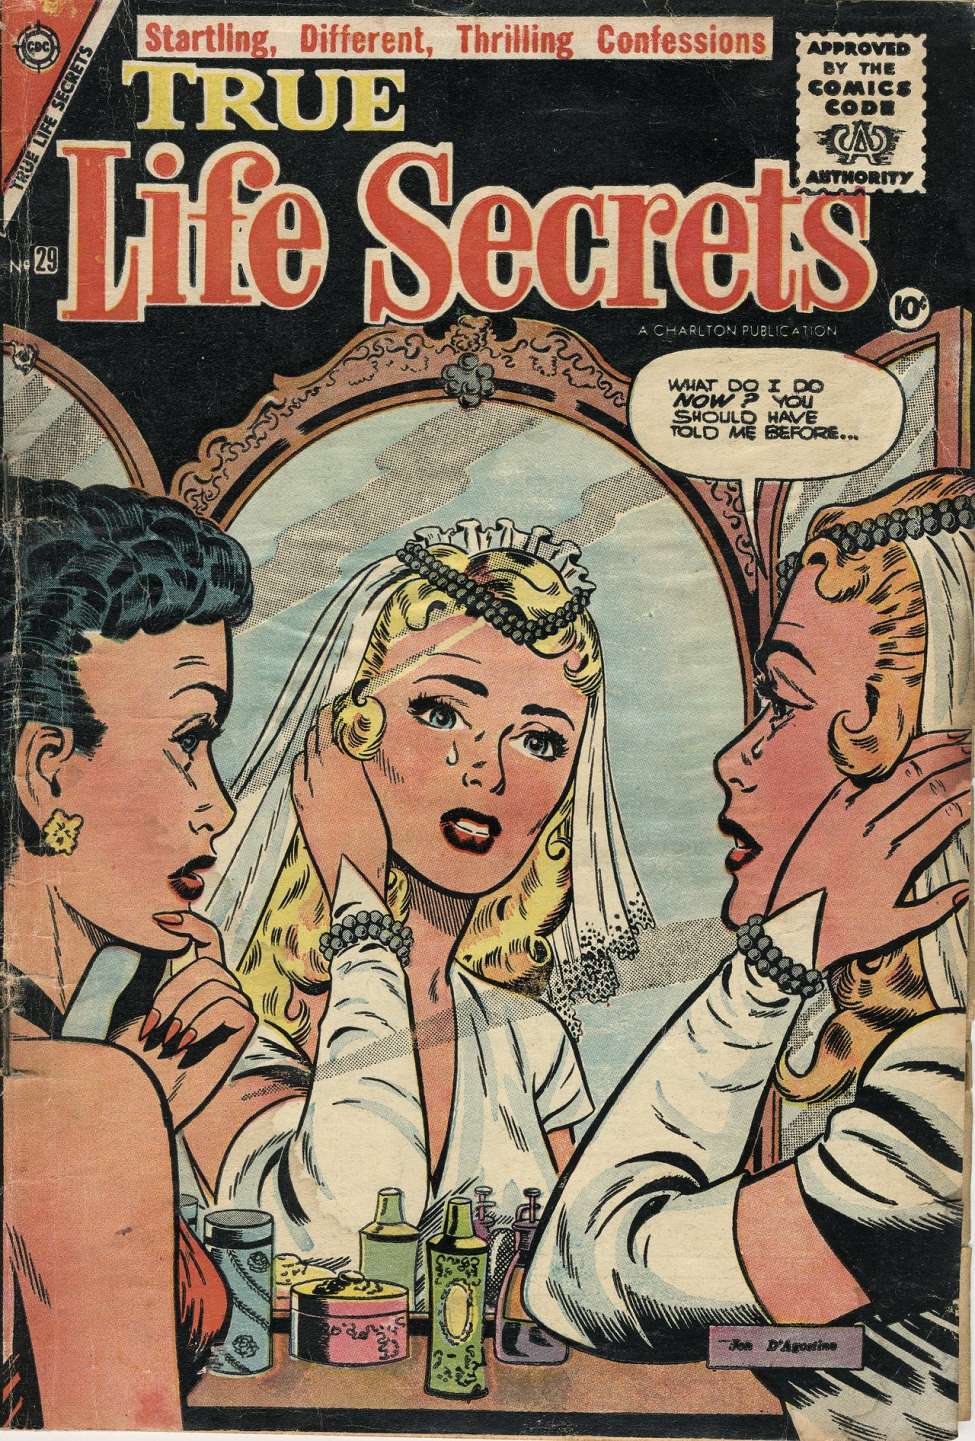 Comic Book Cover For True Life Secrets 29